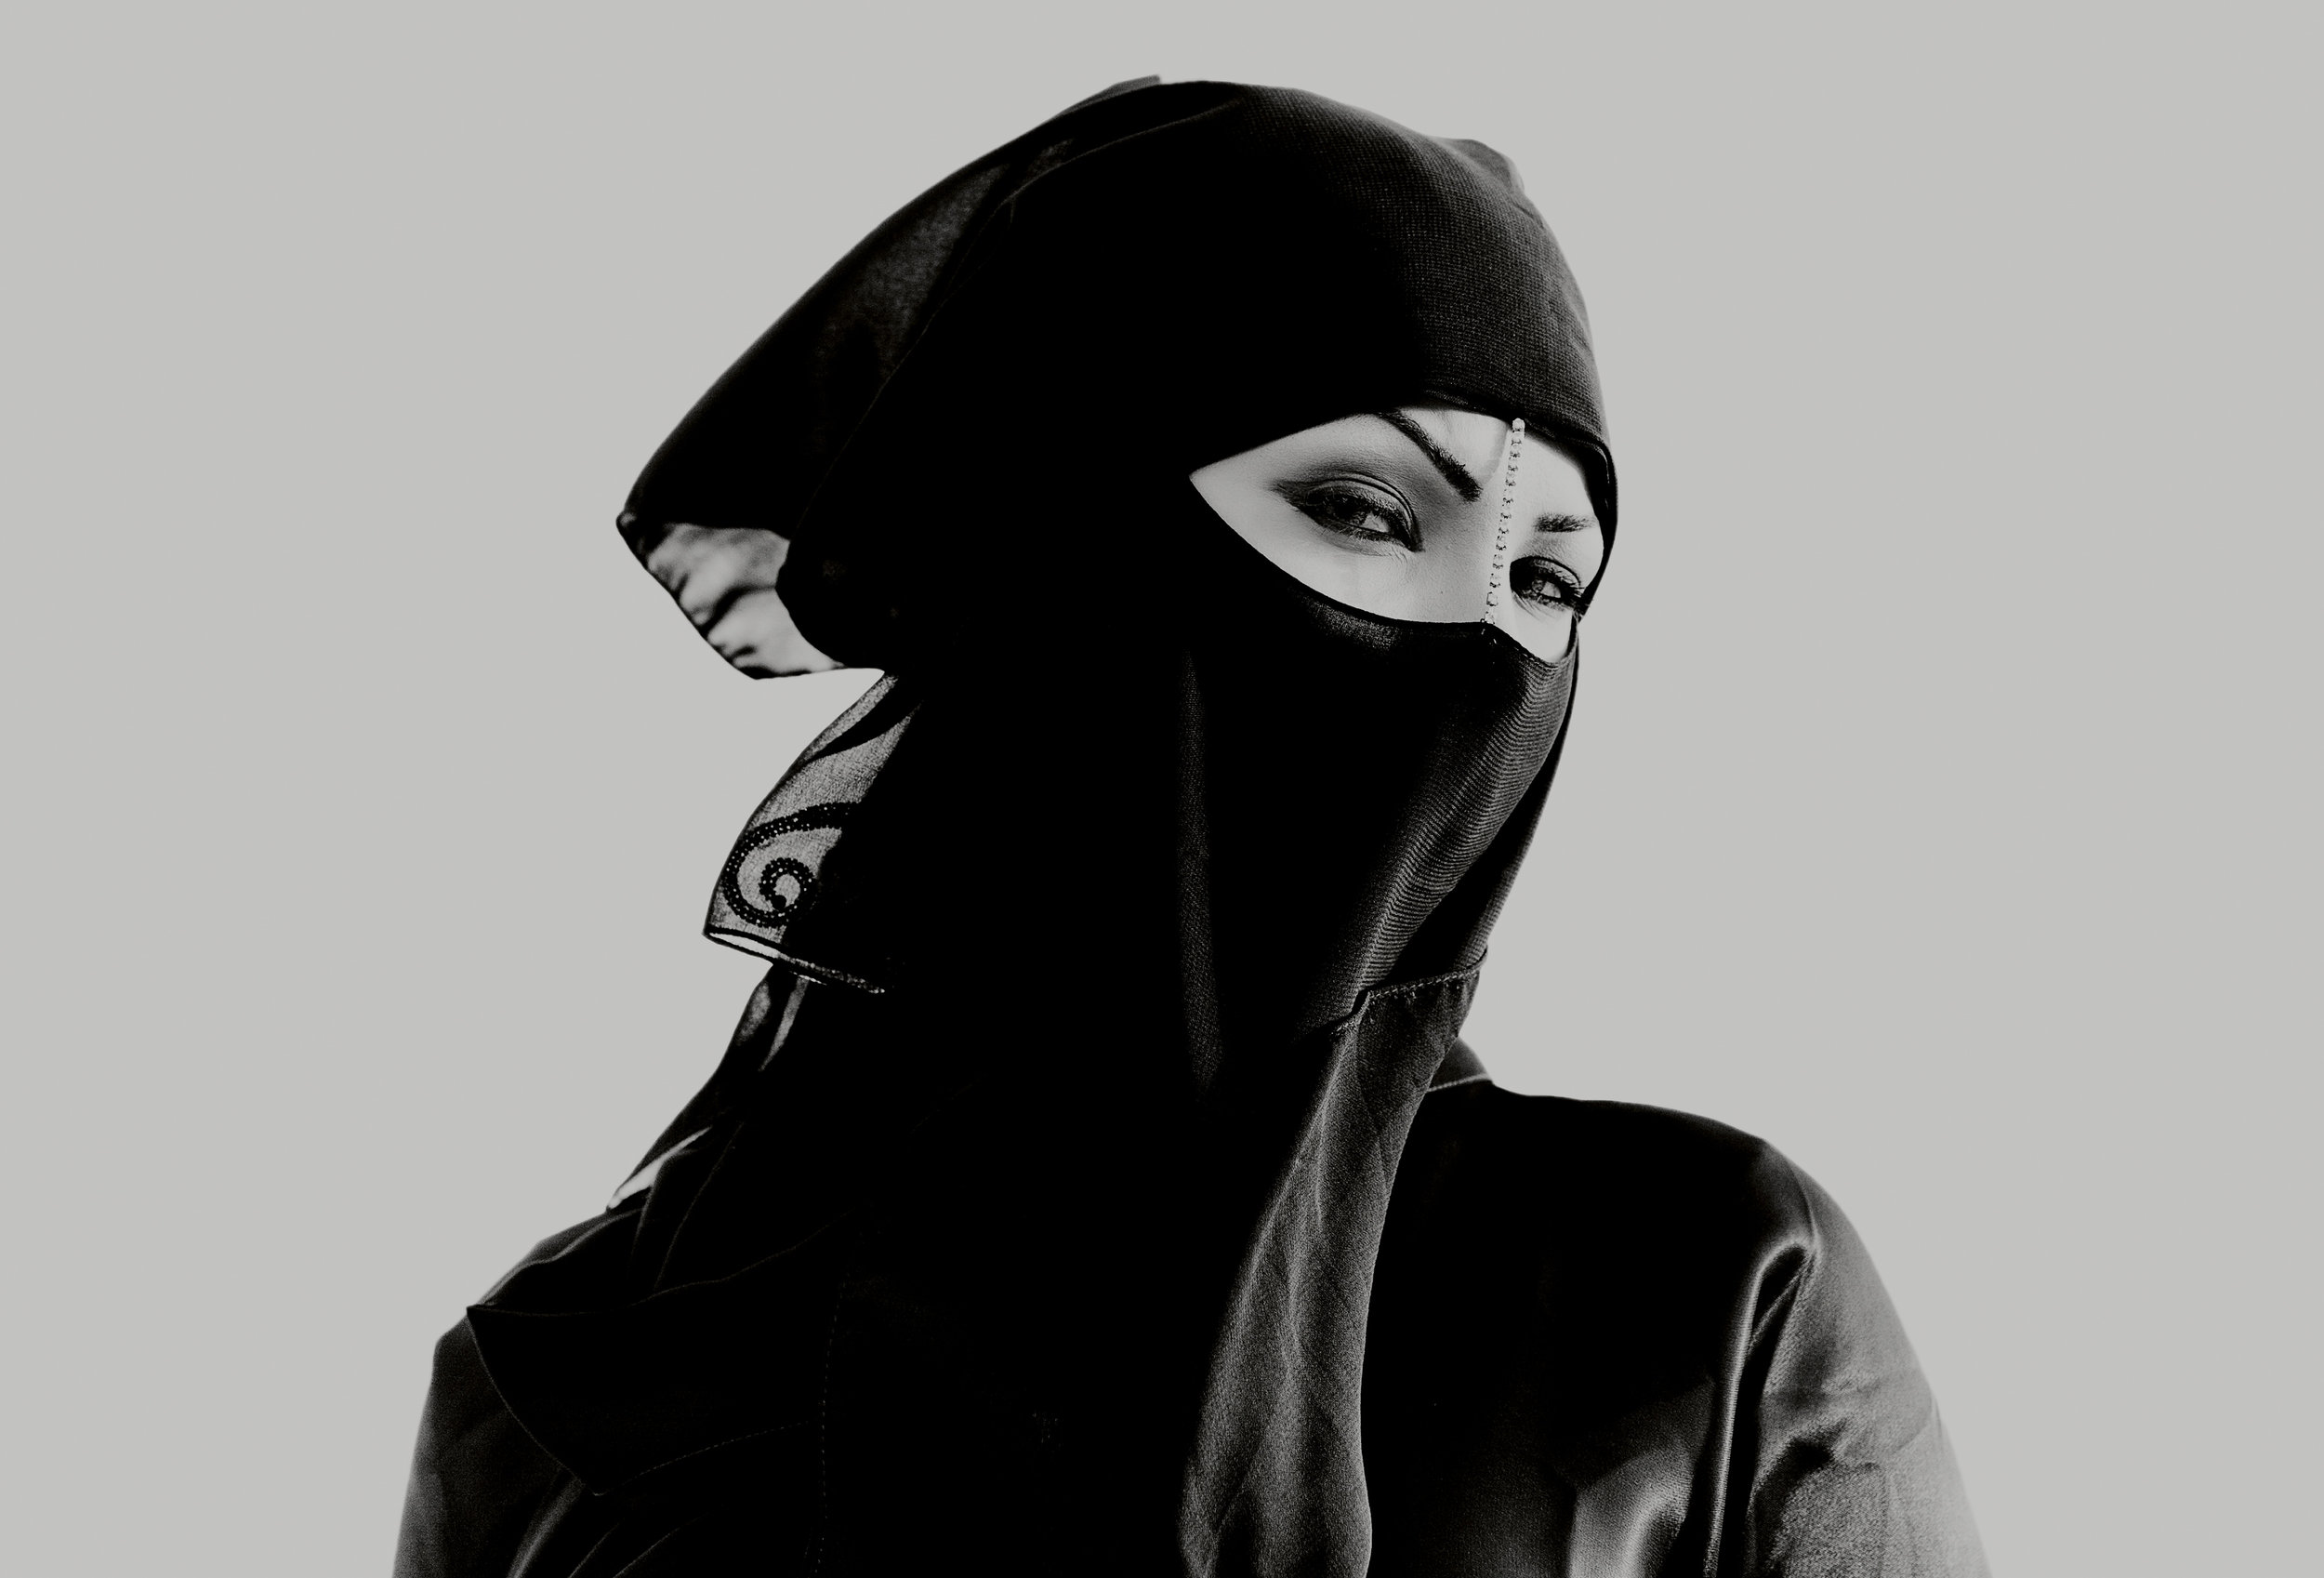 Masked arab